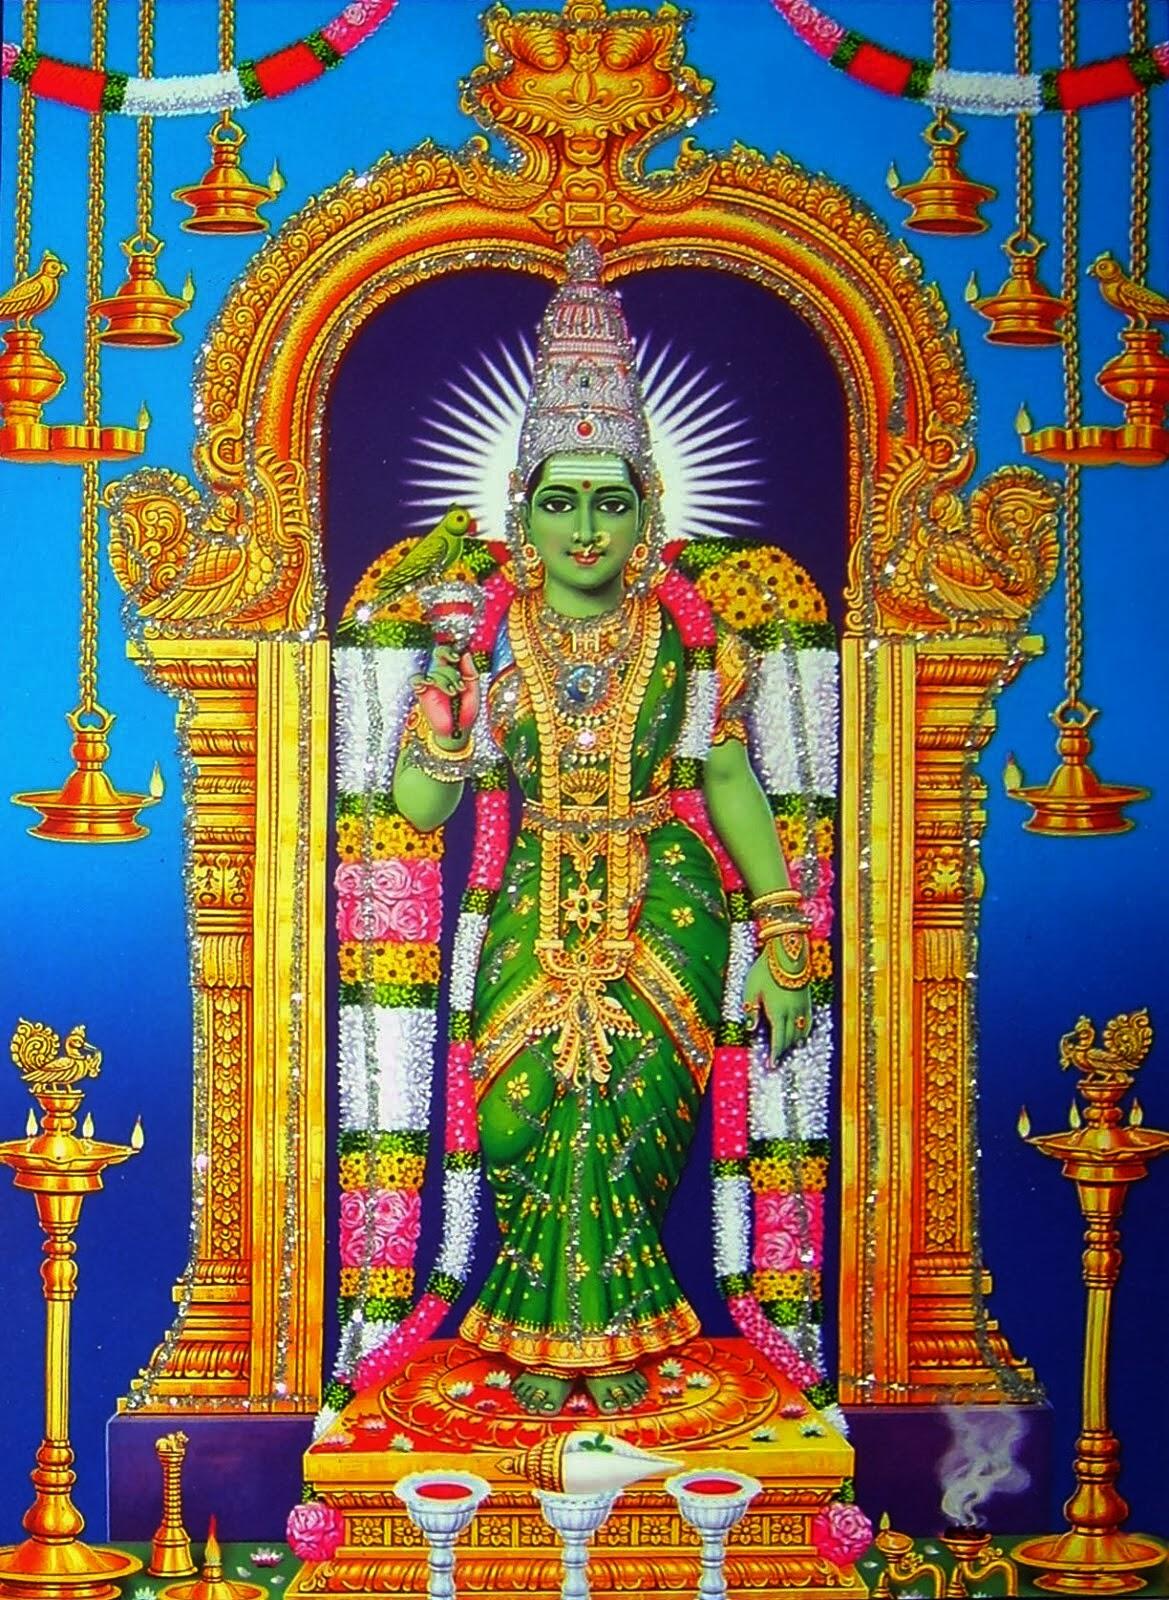 Goddess Madurai Meenakshi Amman Image & Wallpaper